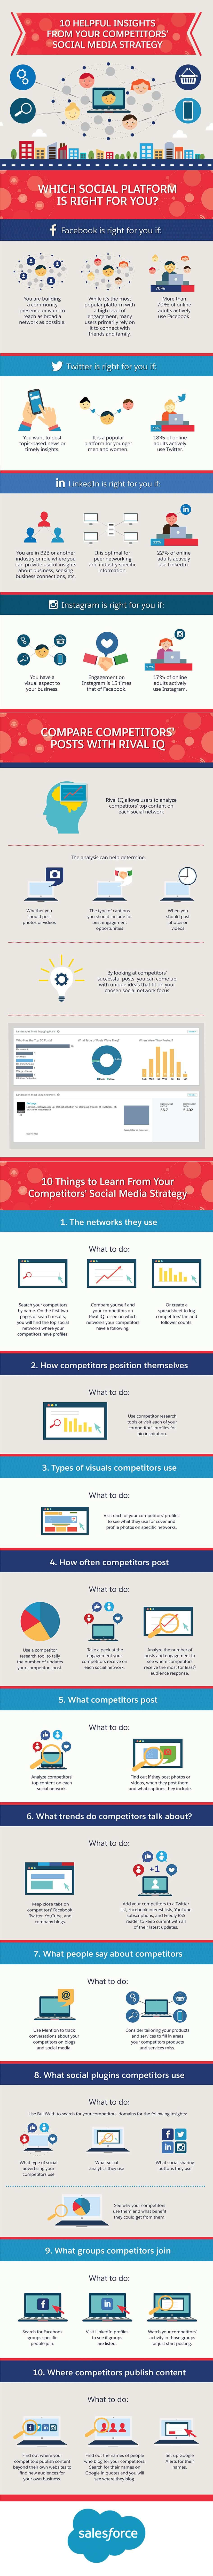 social media konkurrenz